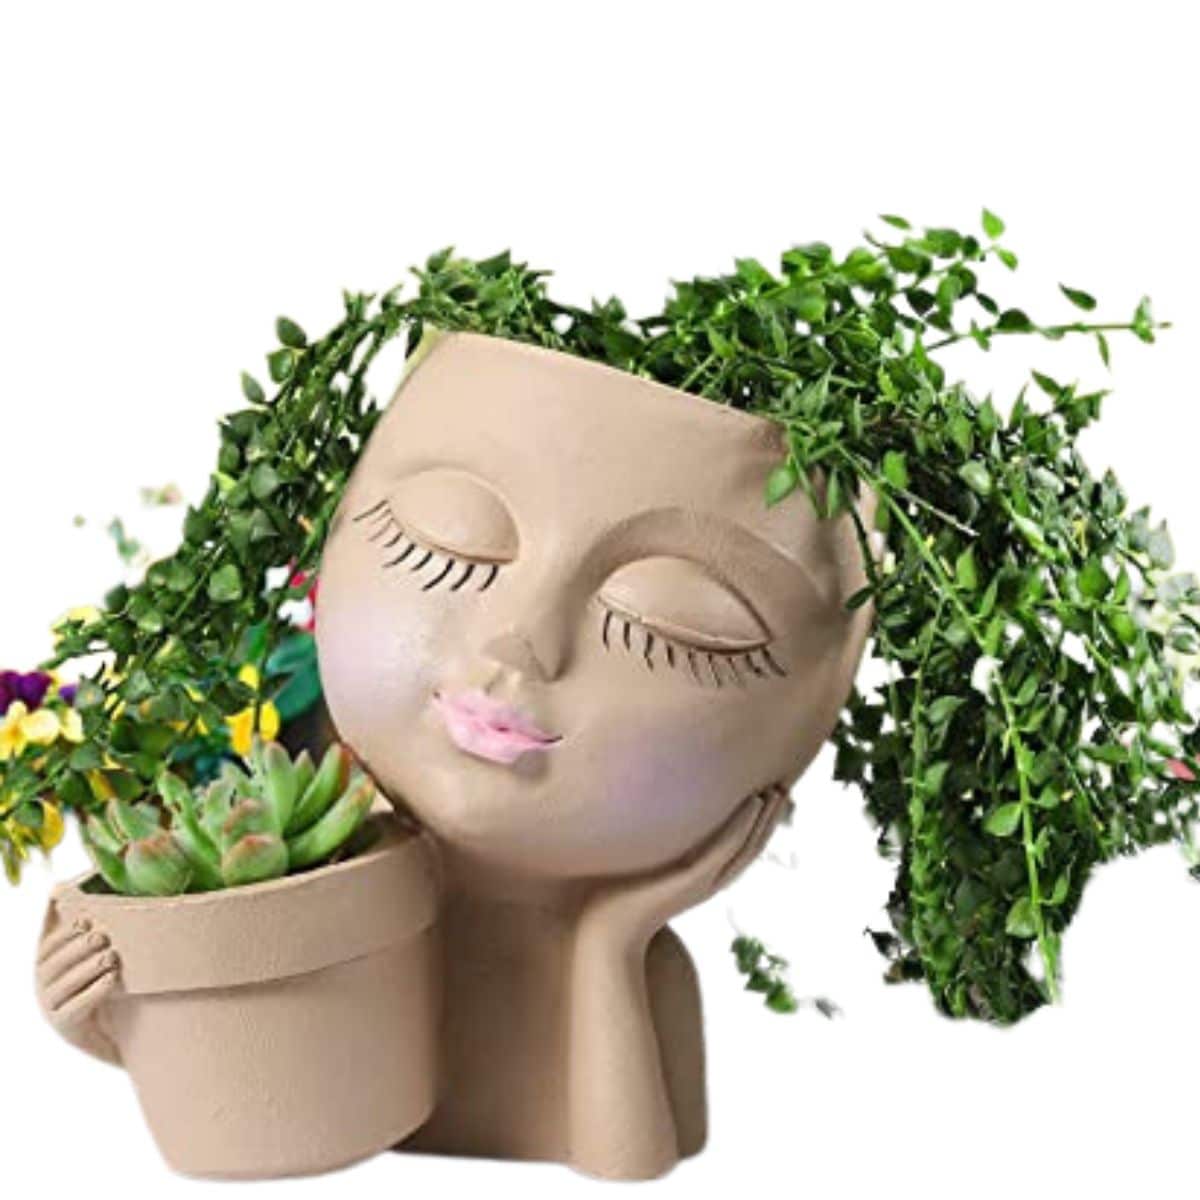 Dual Sweet Girl Head Planter from Amazon.